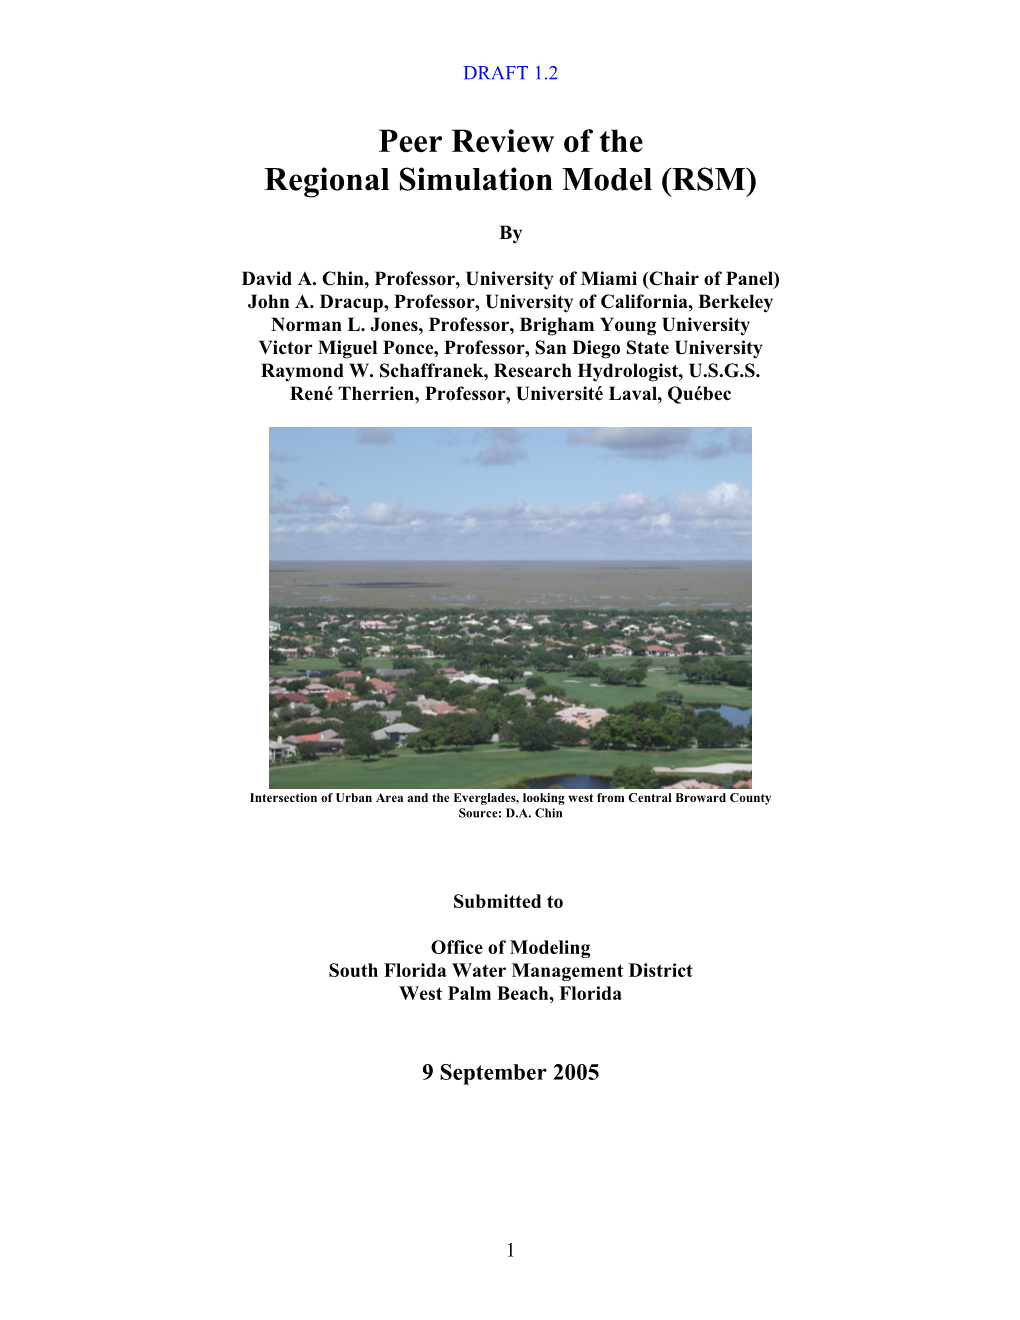 Peer Review of Regional Simulation Model (RSM)